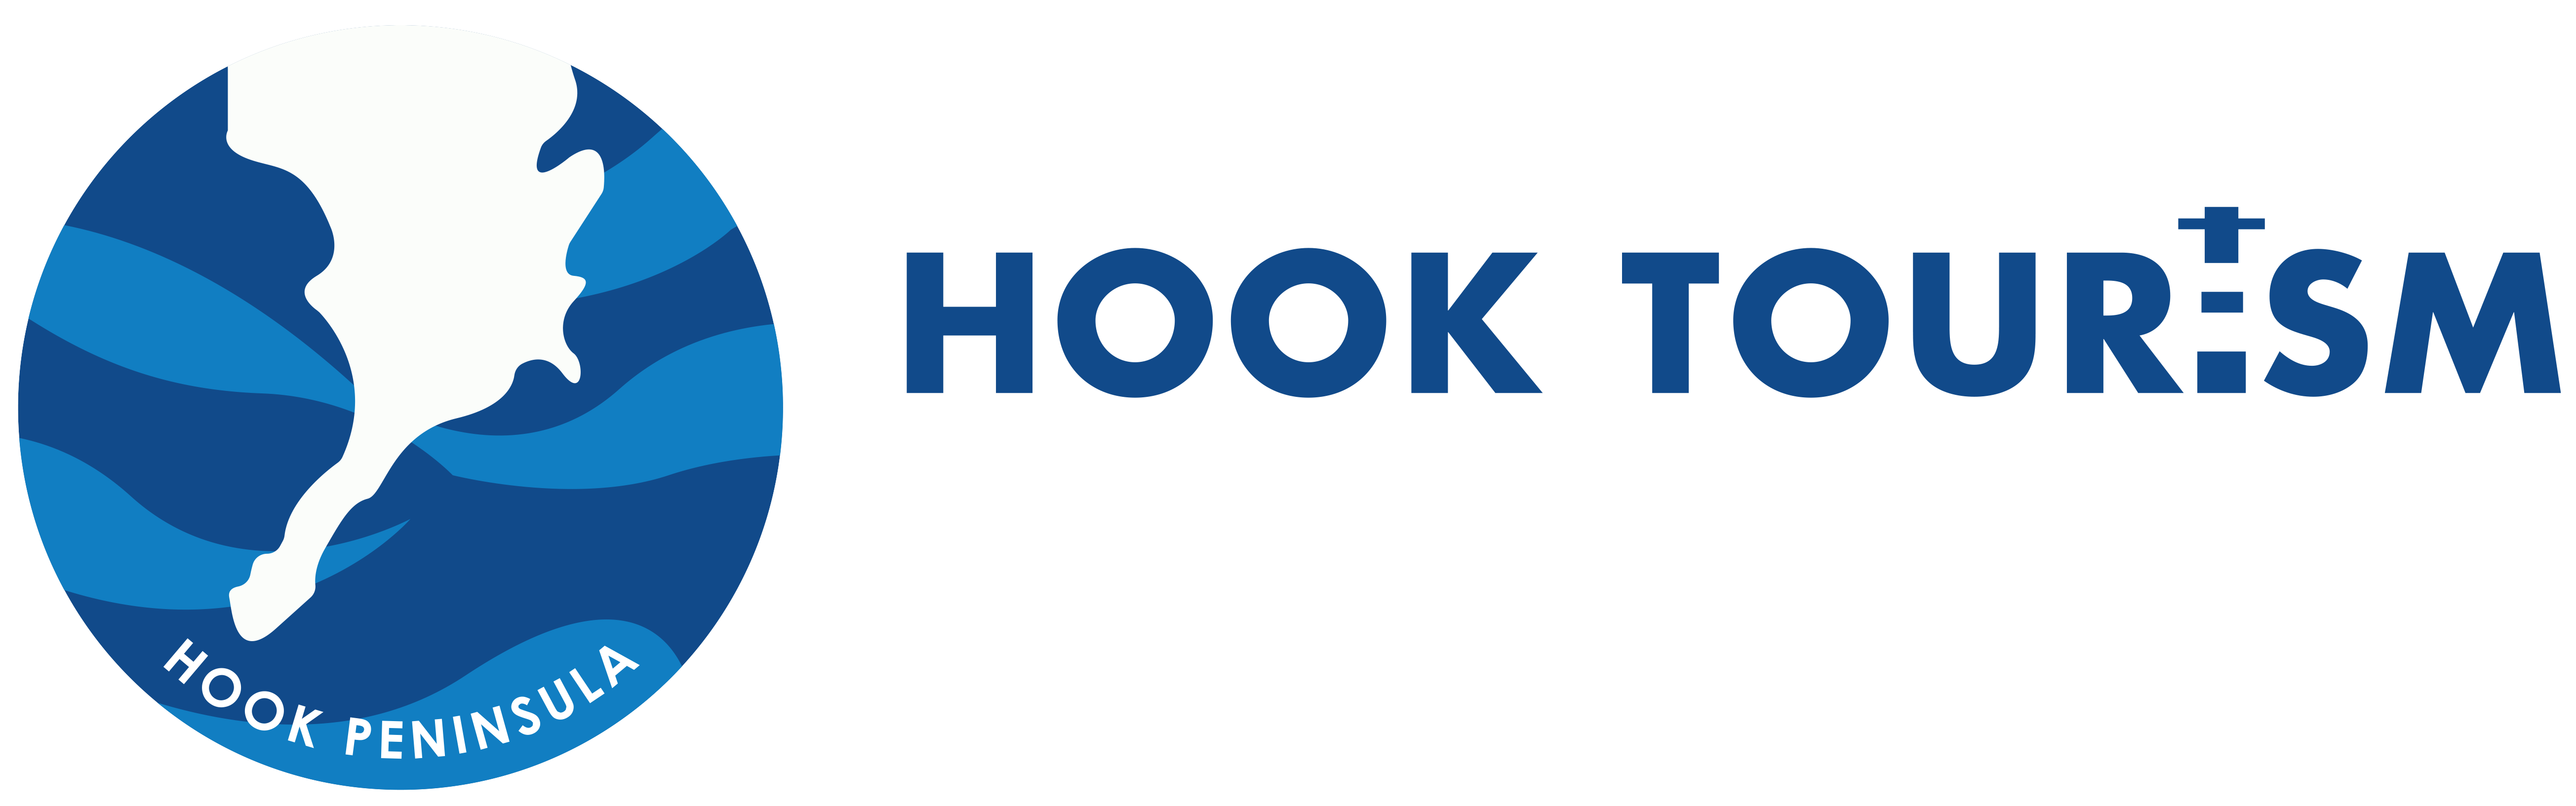 Hook Tourism